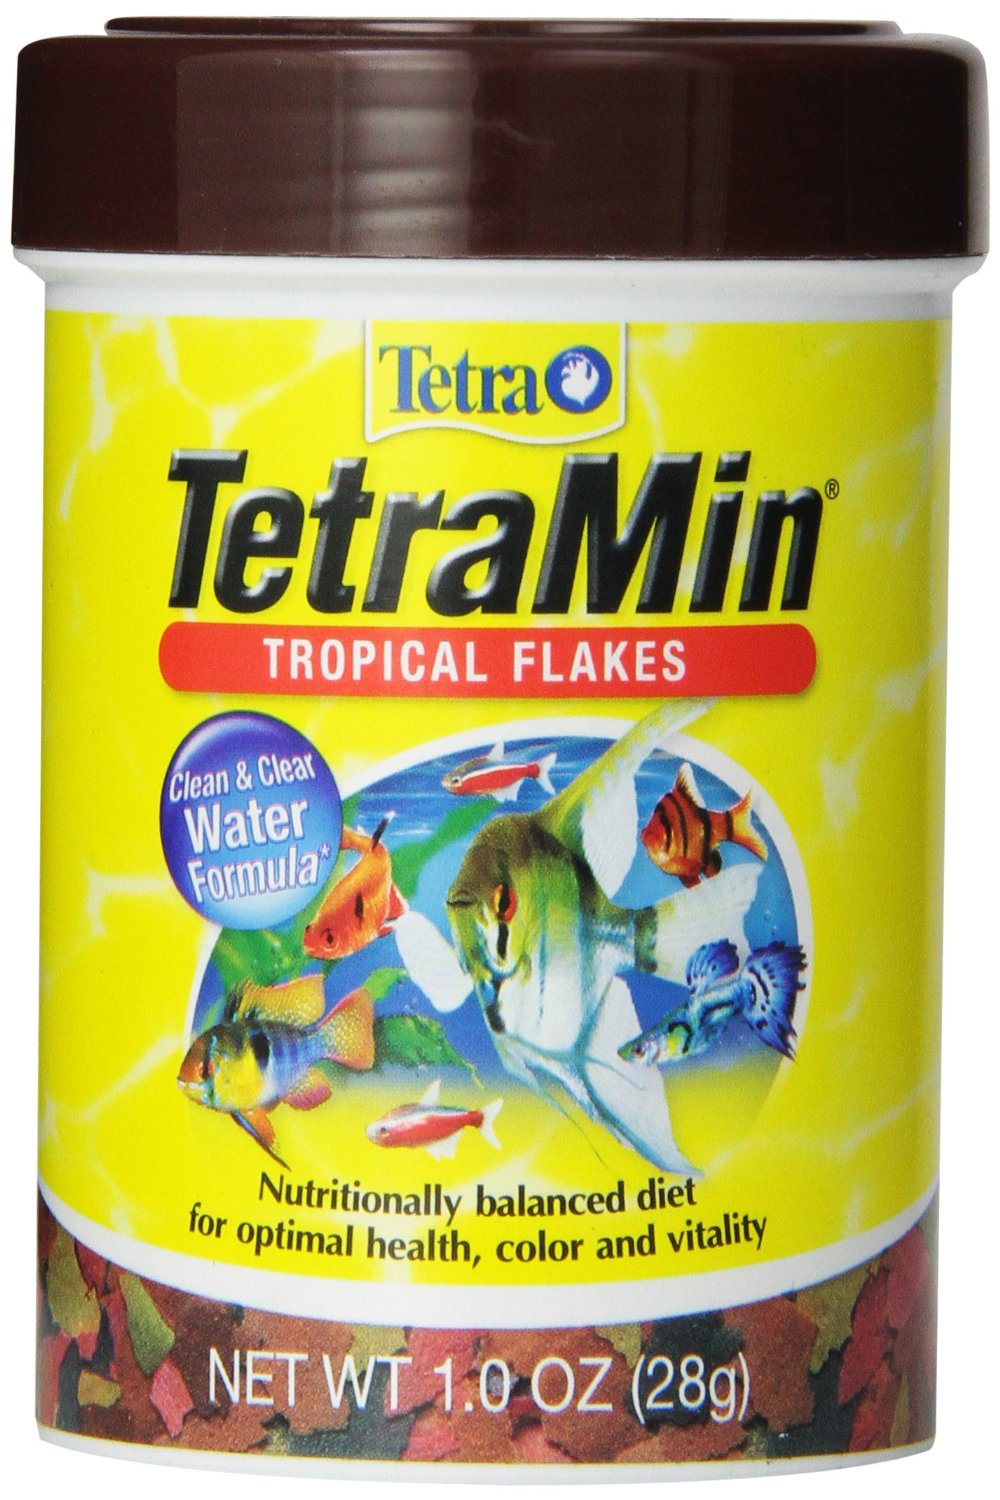 TetraMin Tropical Flakes, 1 oz